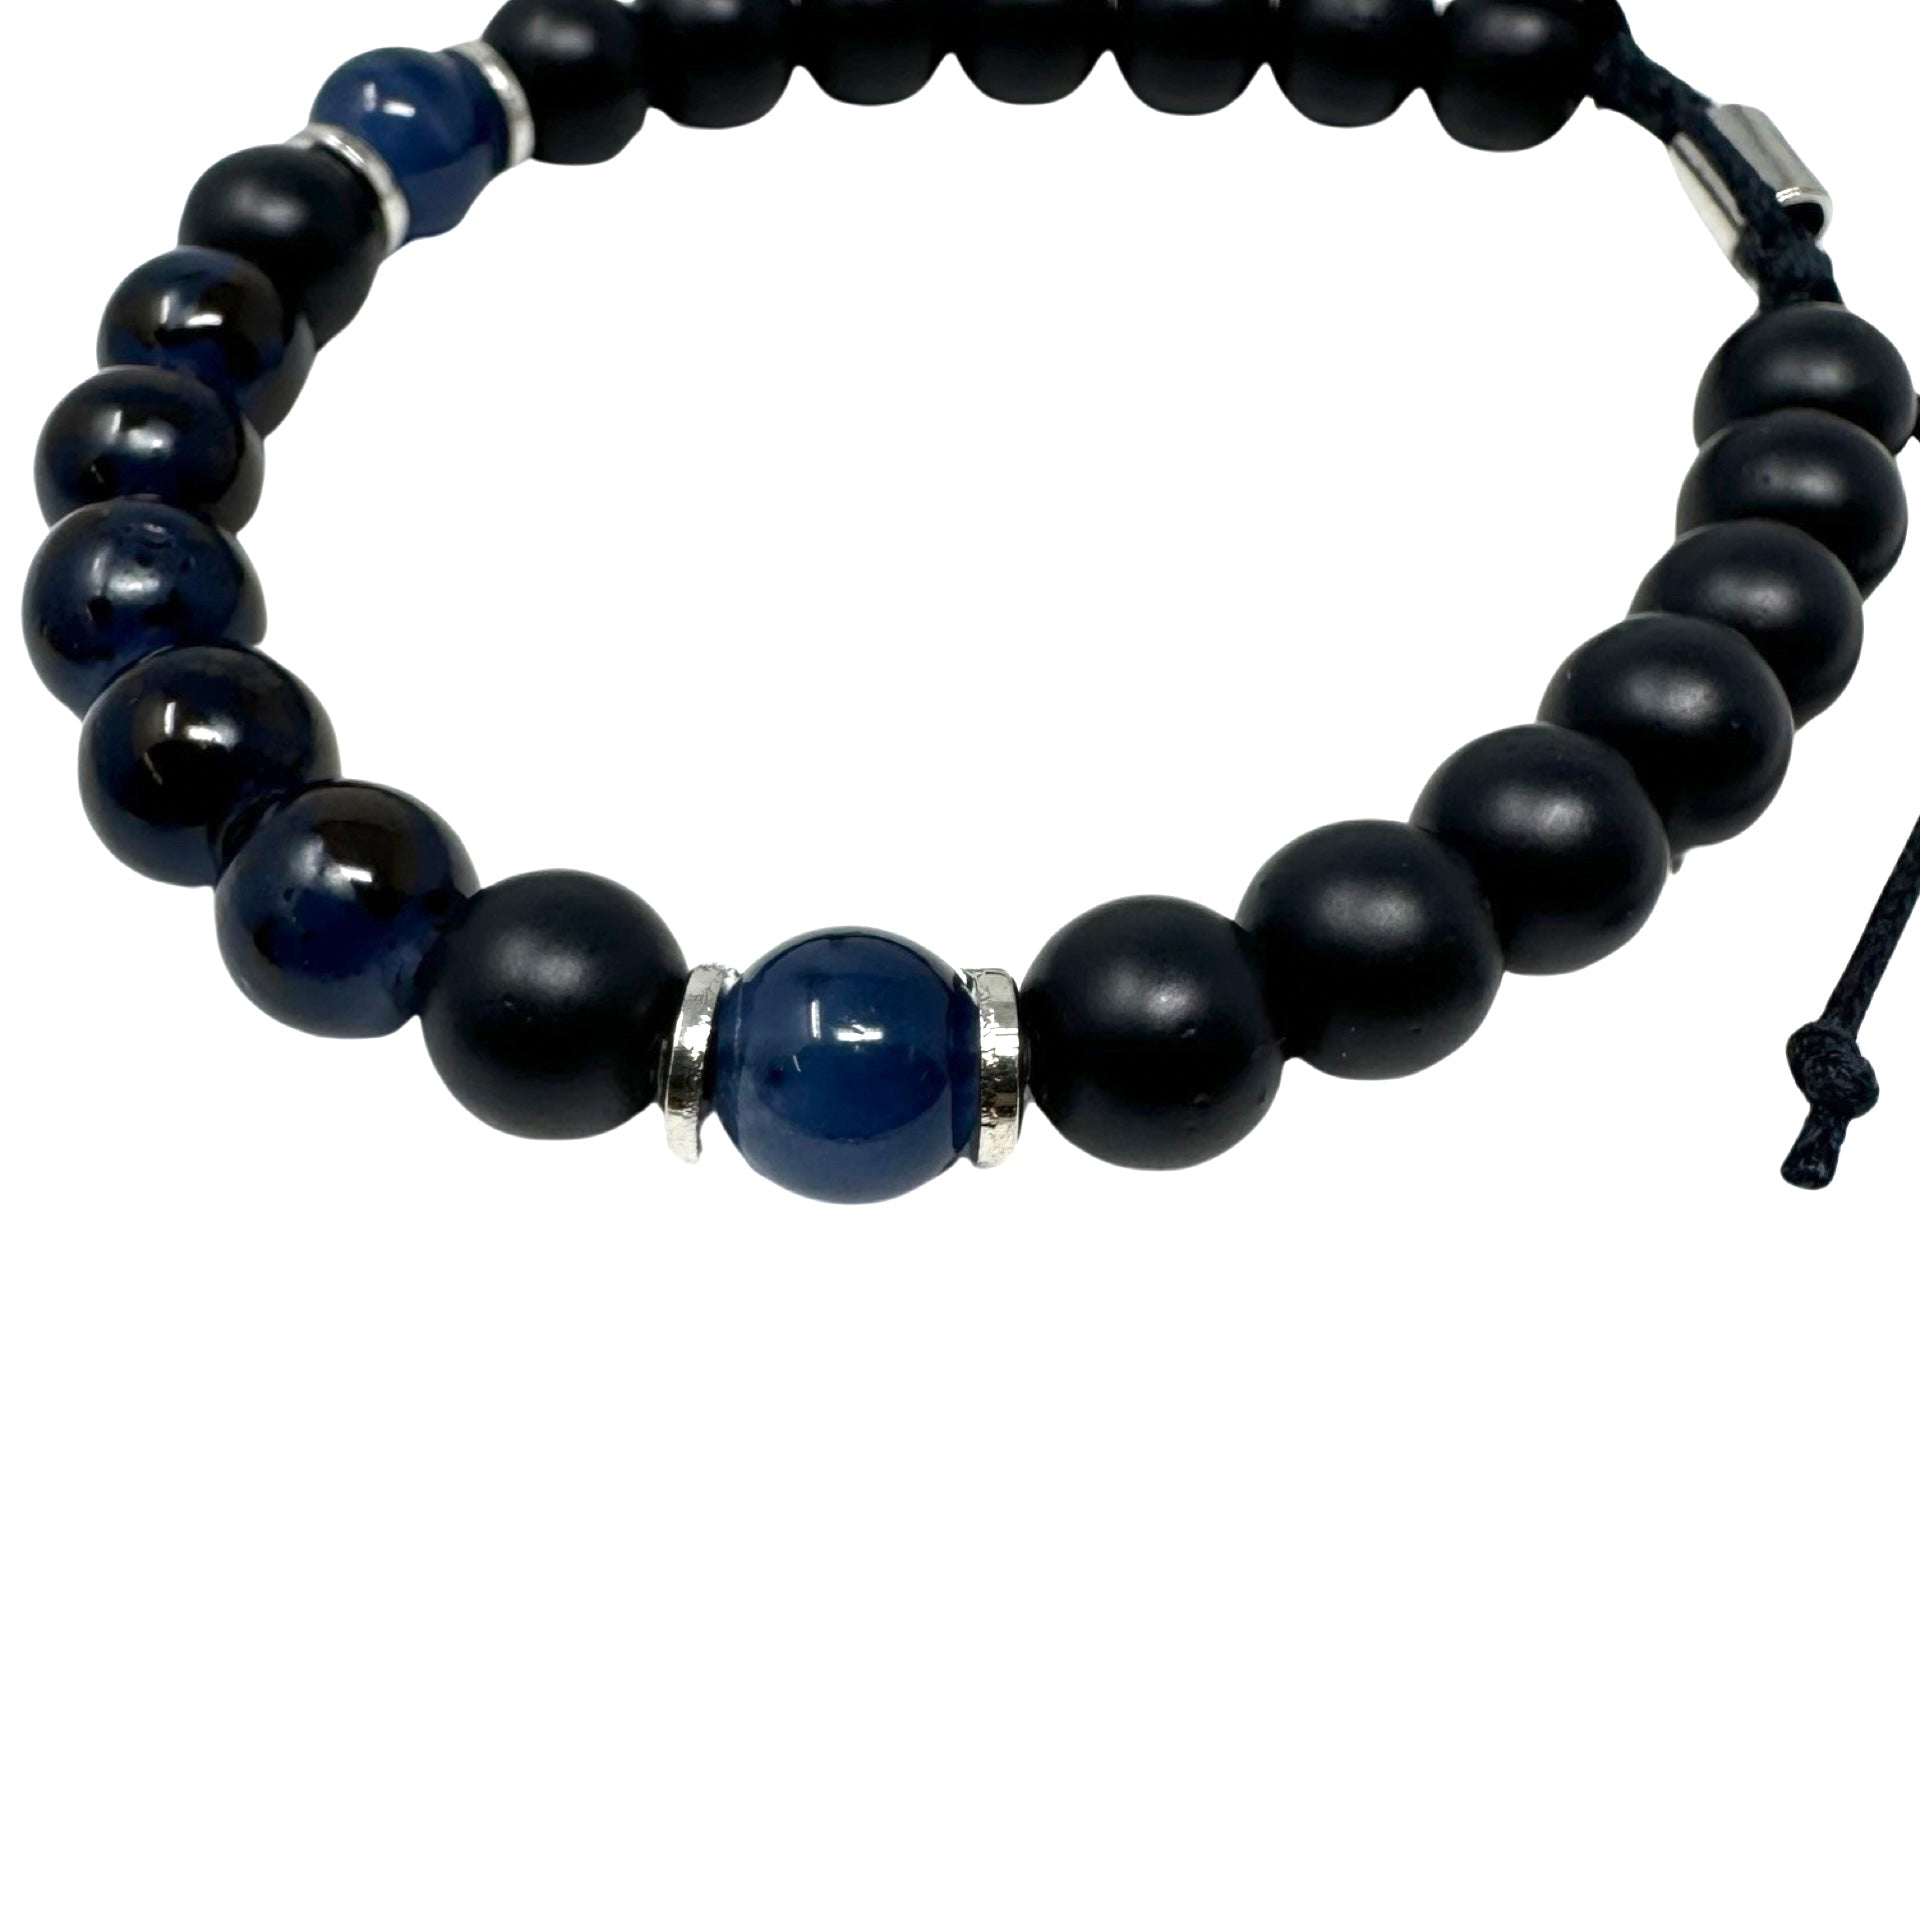 Black and Blue Mixed Stone Bead Bracelet